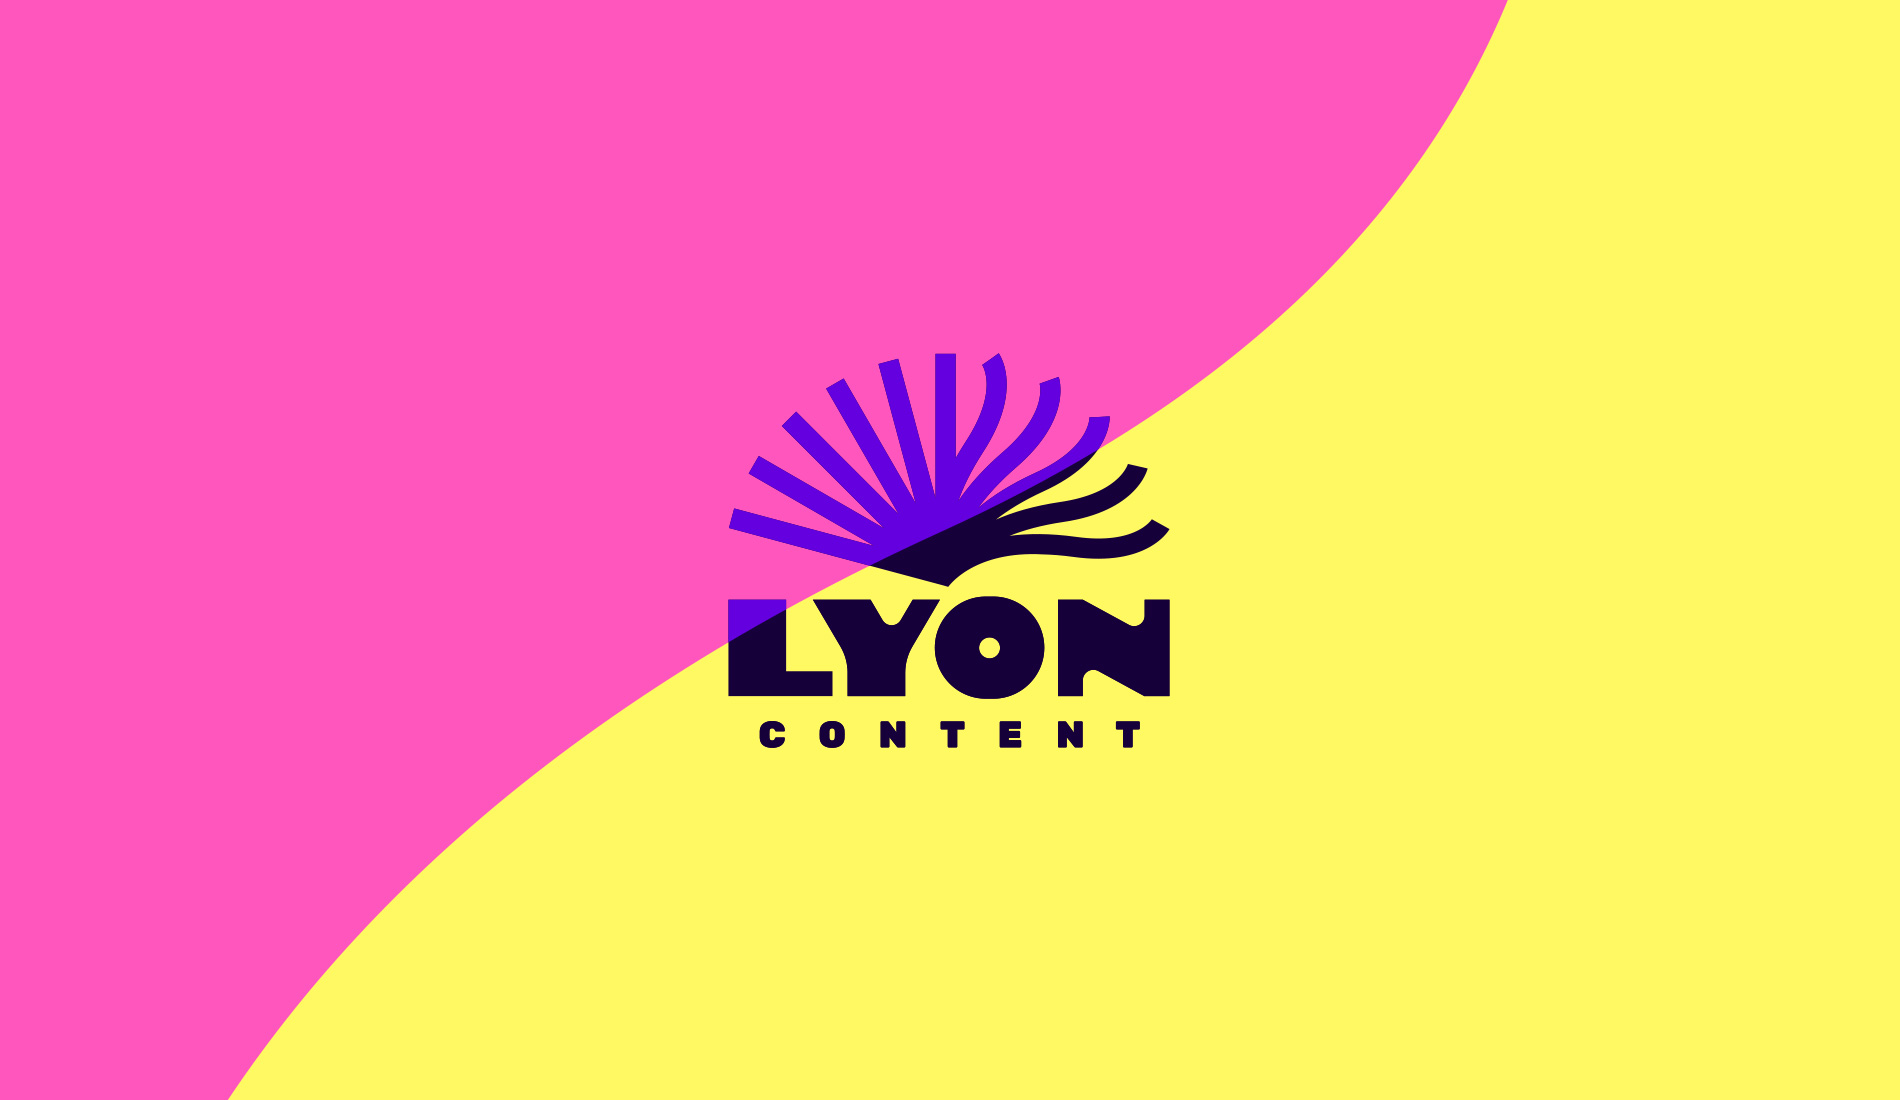 Lyon Content Design Agencies Animation